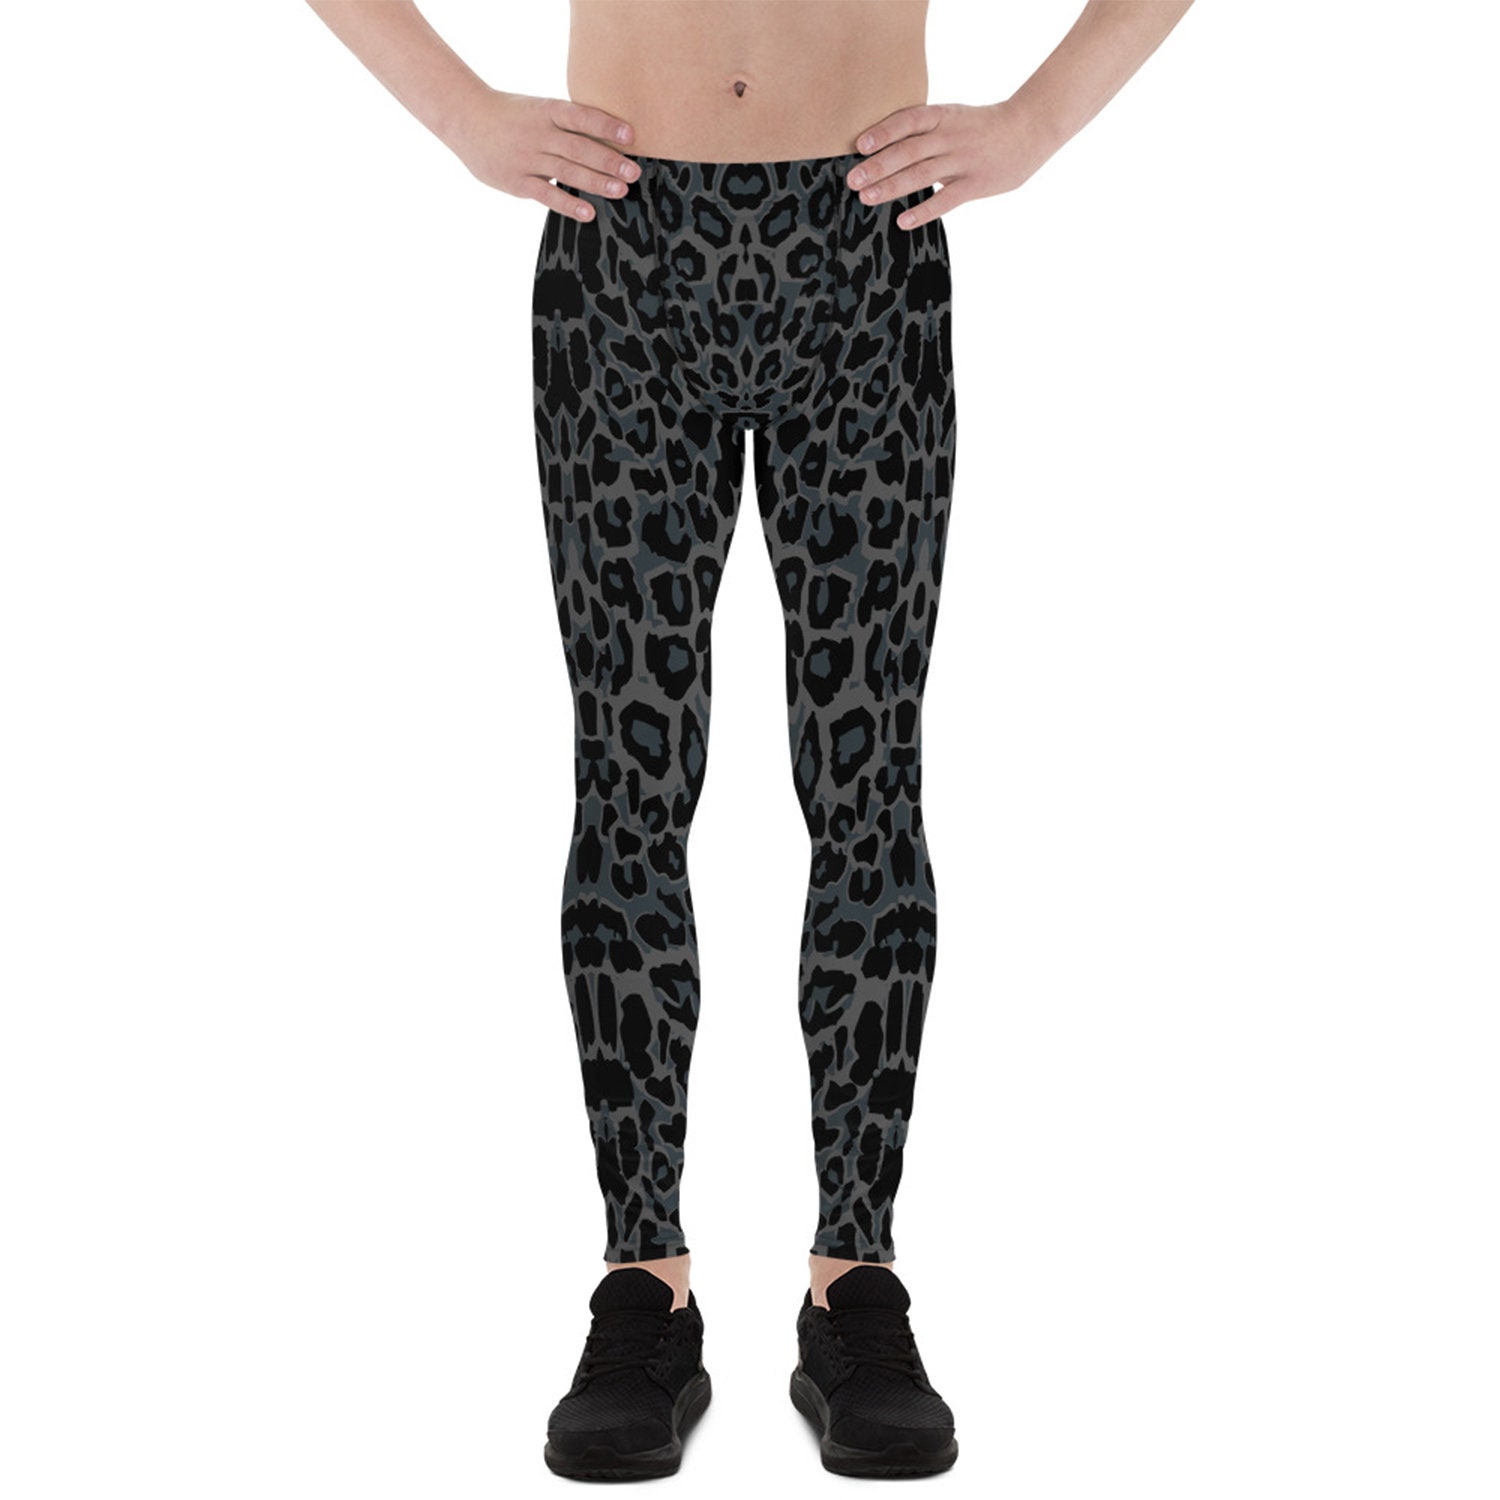 Buy Aesthetic Bodies Womens Leopard Print Legging-Black Online